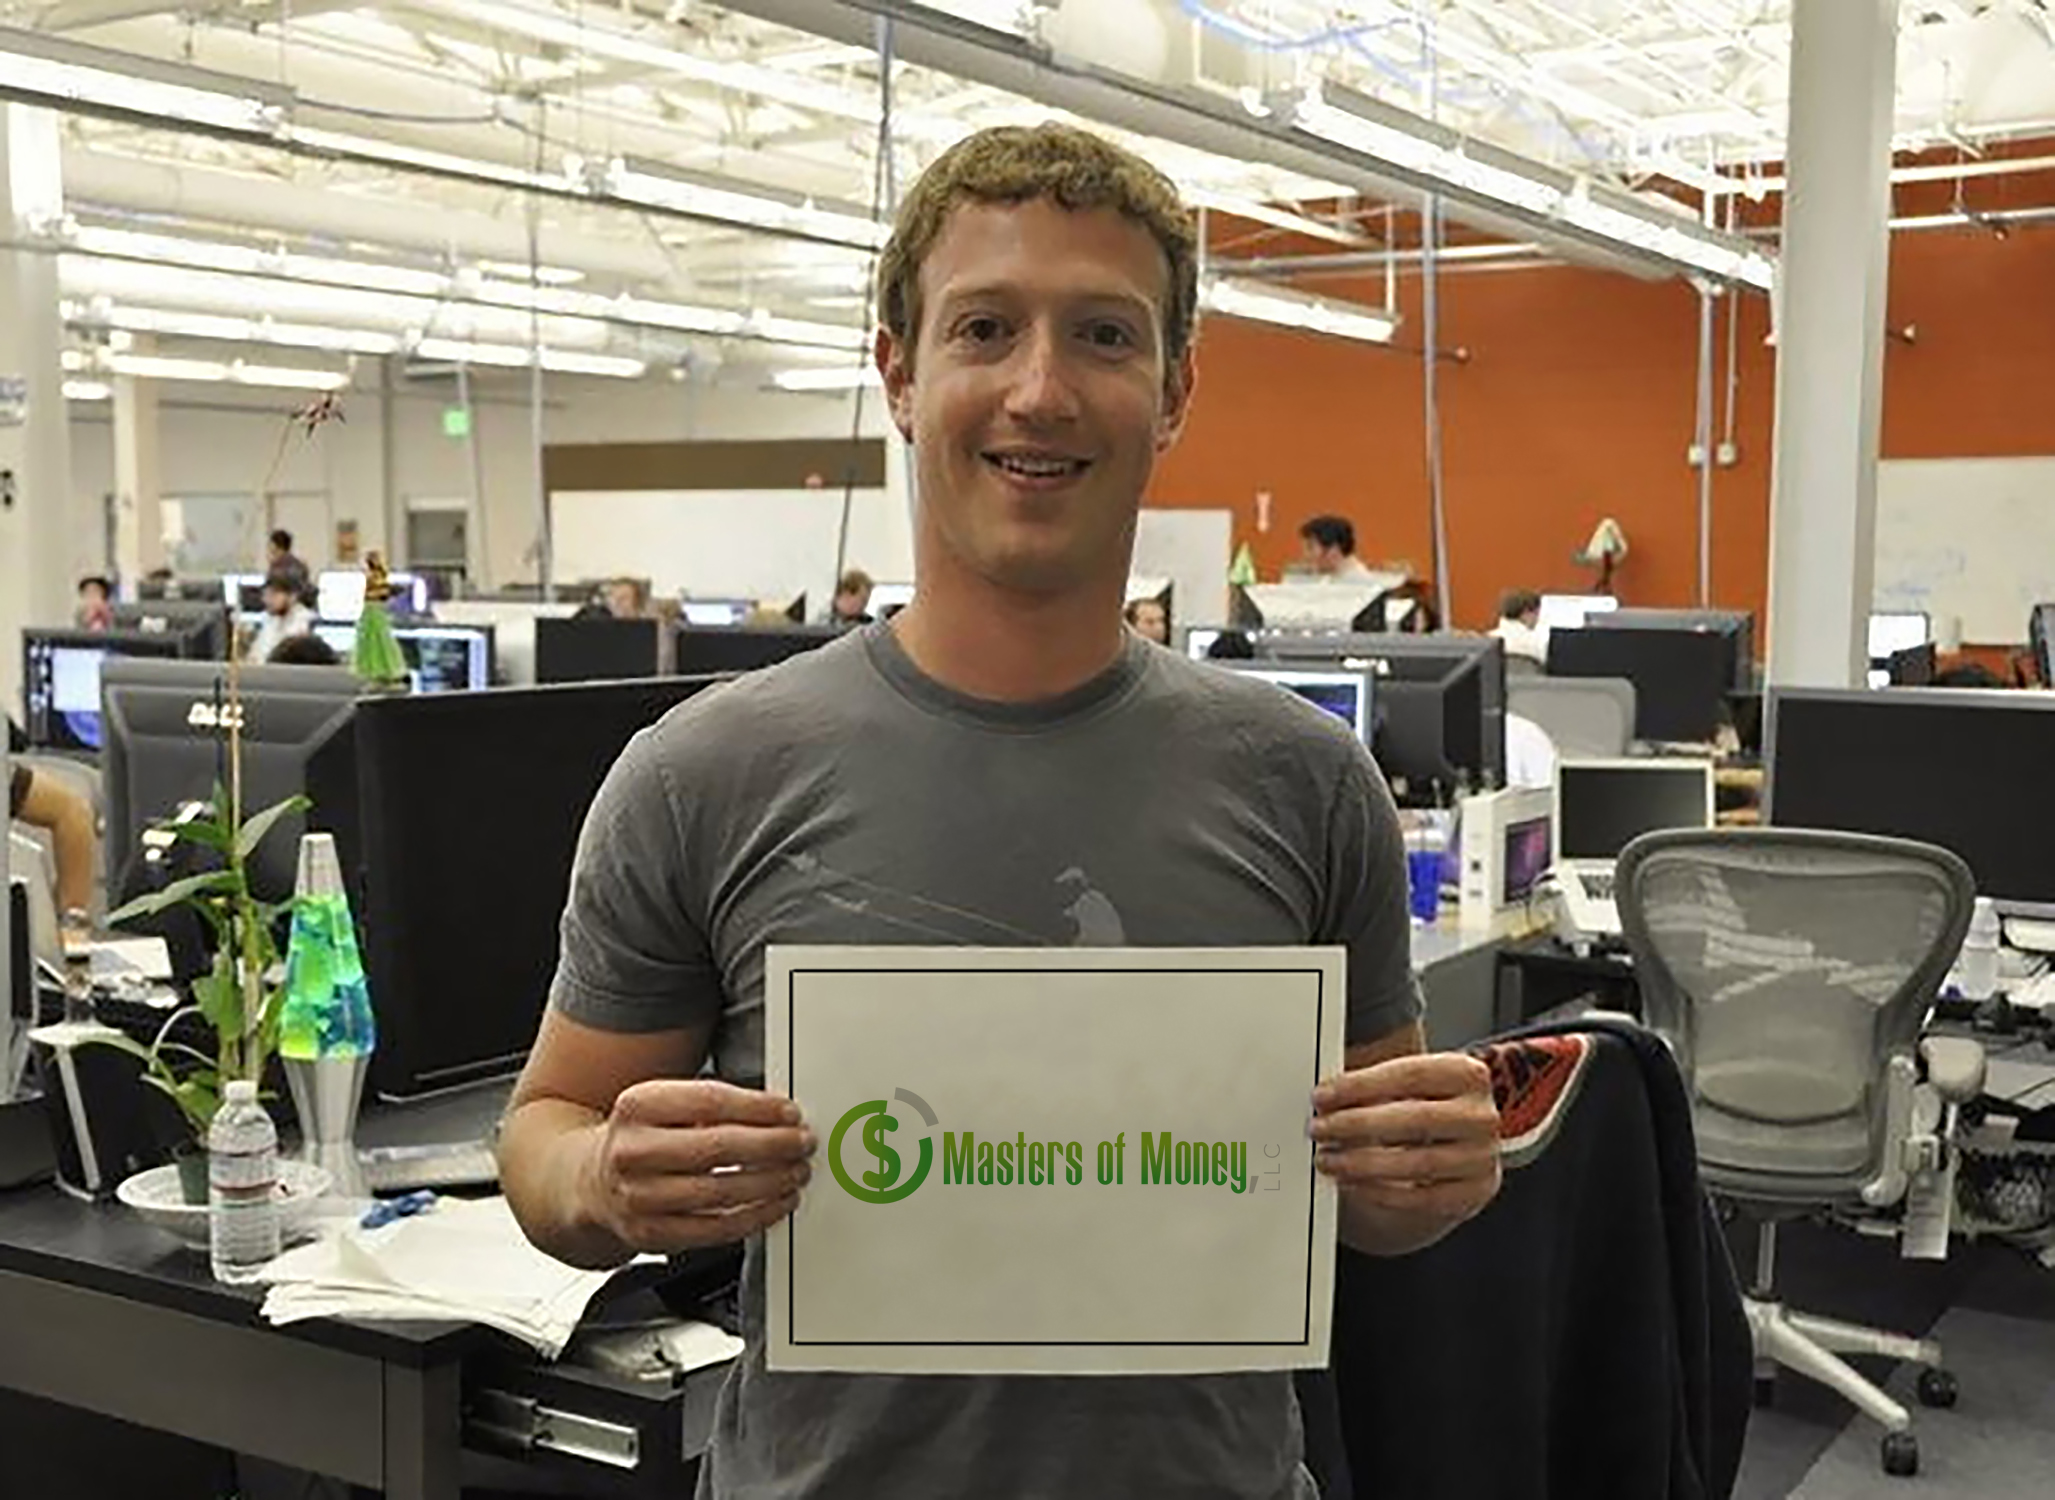 Mark Zuckerberg holding a Masters of Money logo sign.